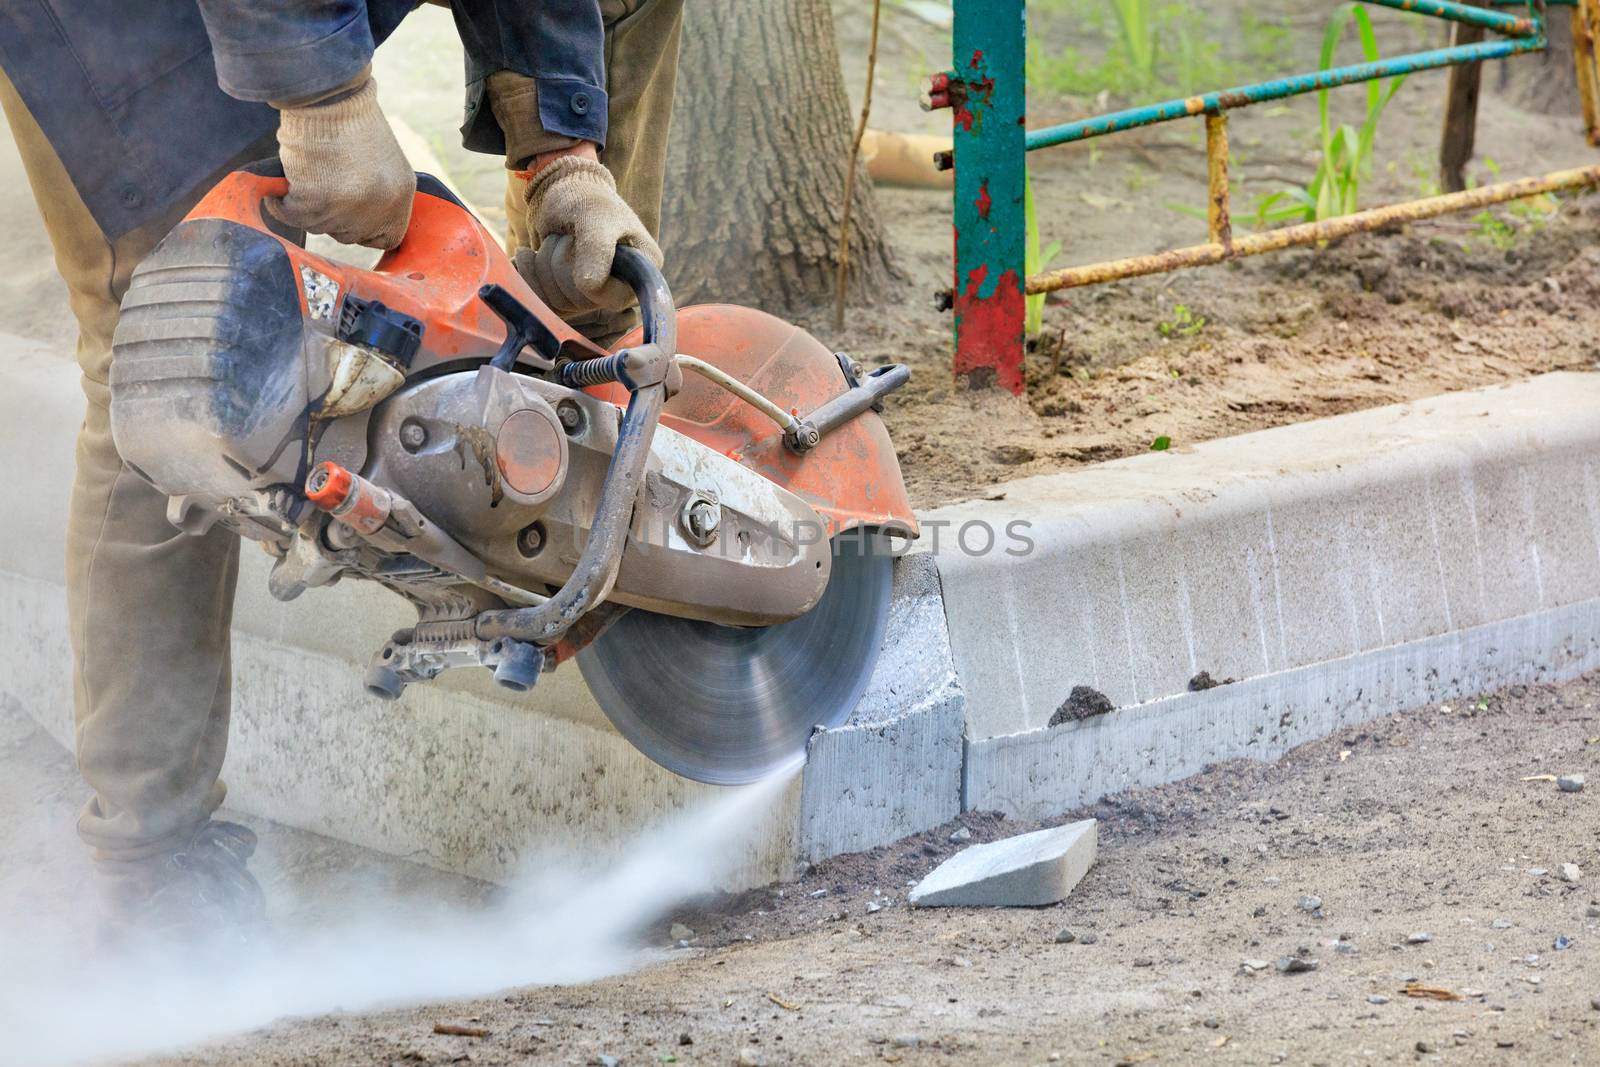 A worker using a concrete cutter cuts concrete curbs in a cloud of concrete dust in an open space.